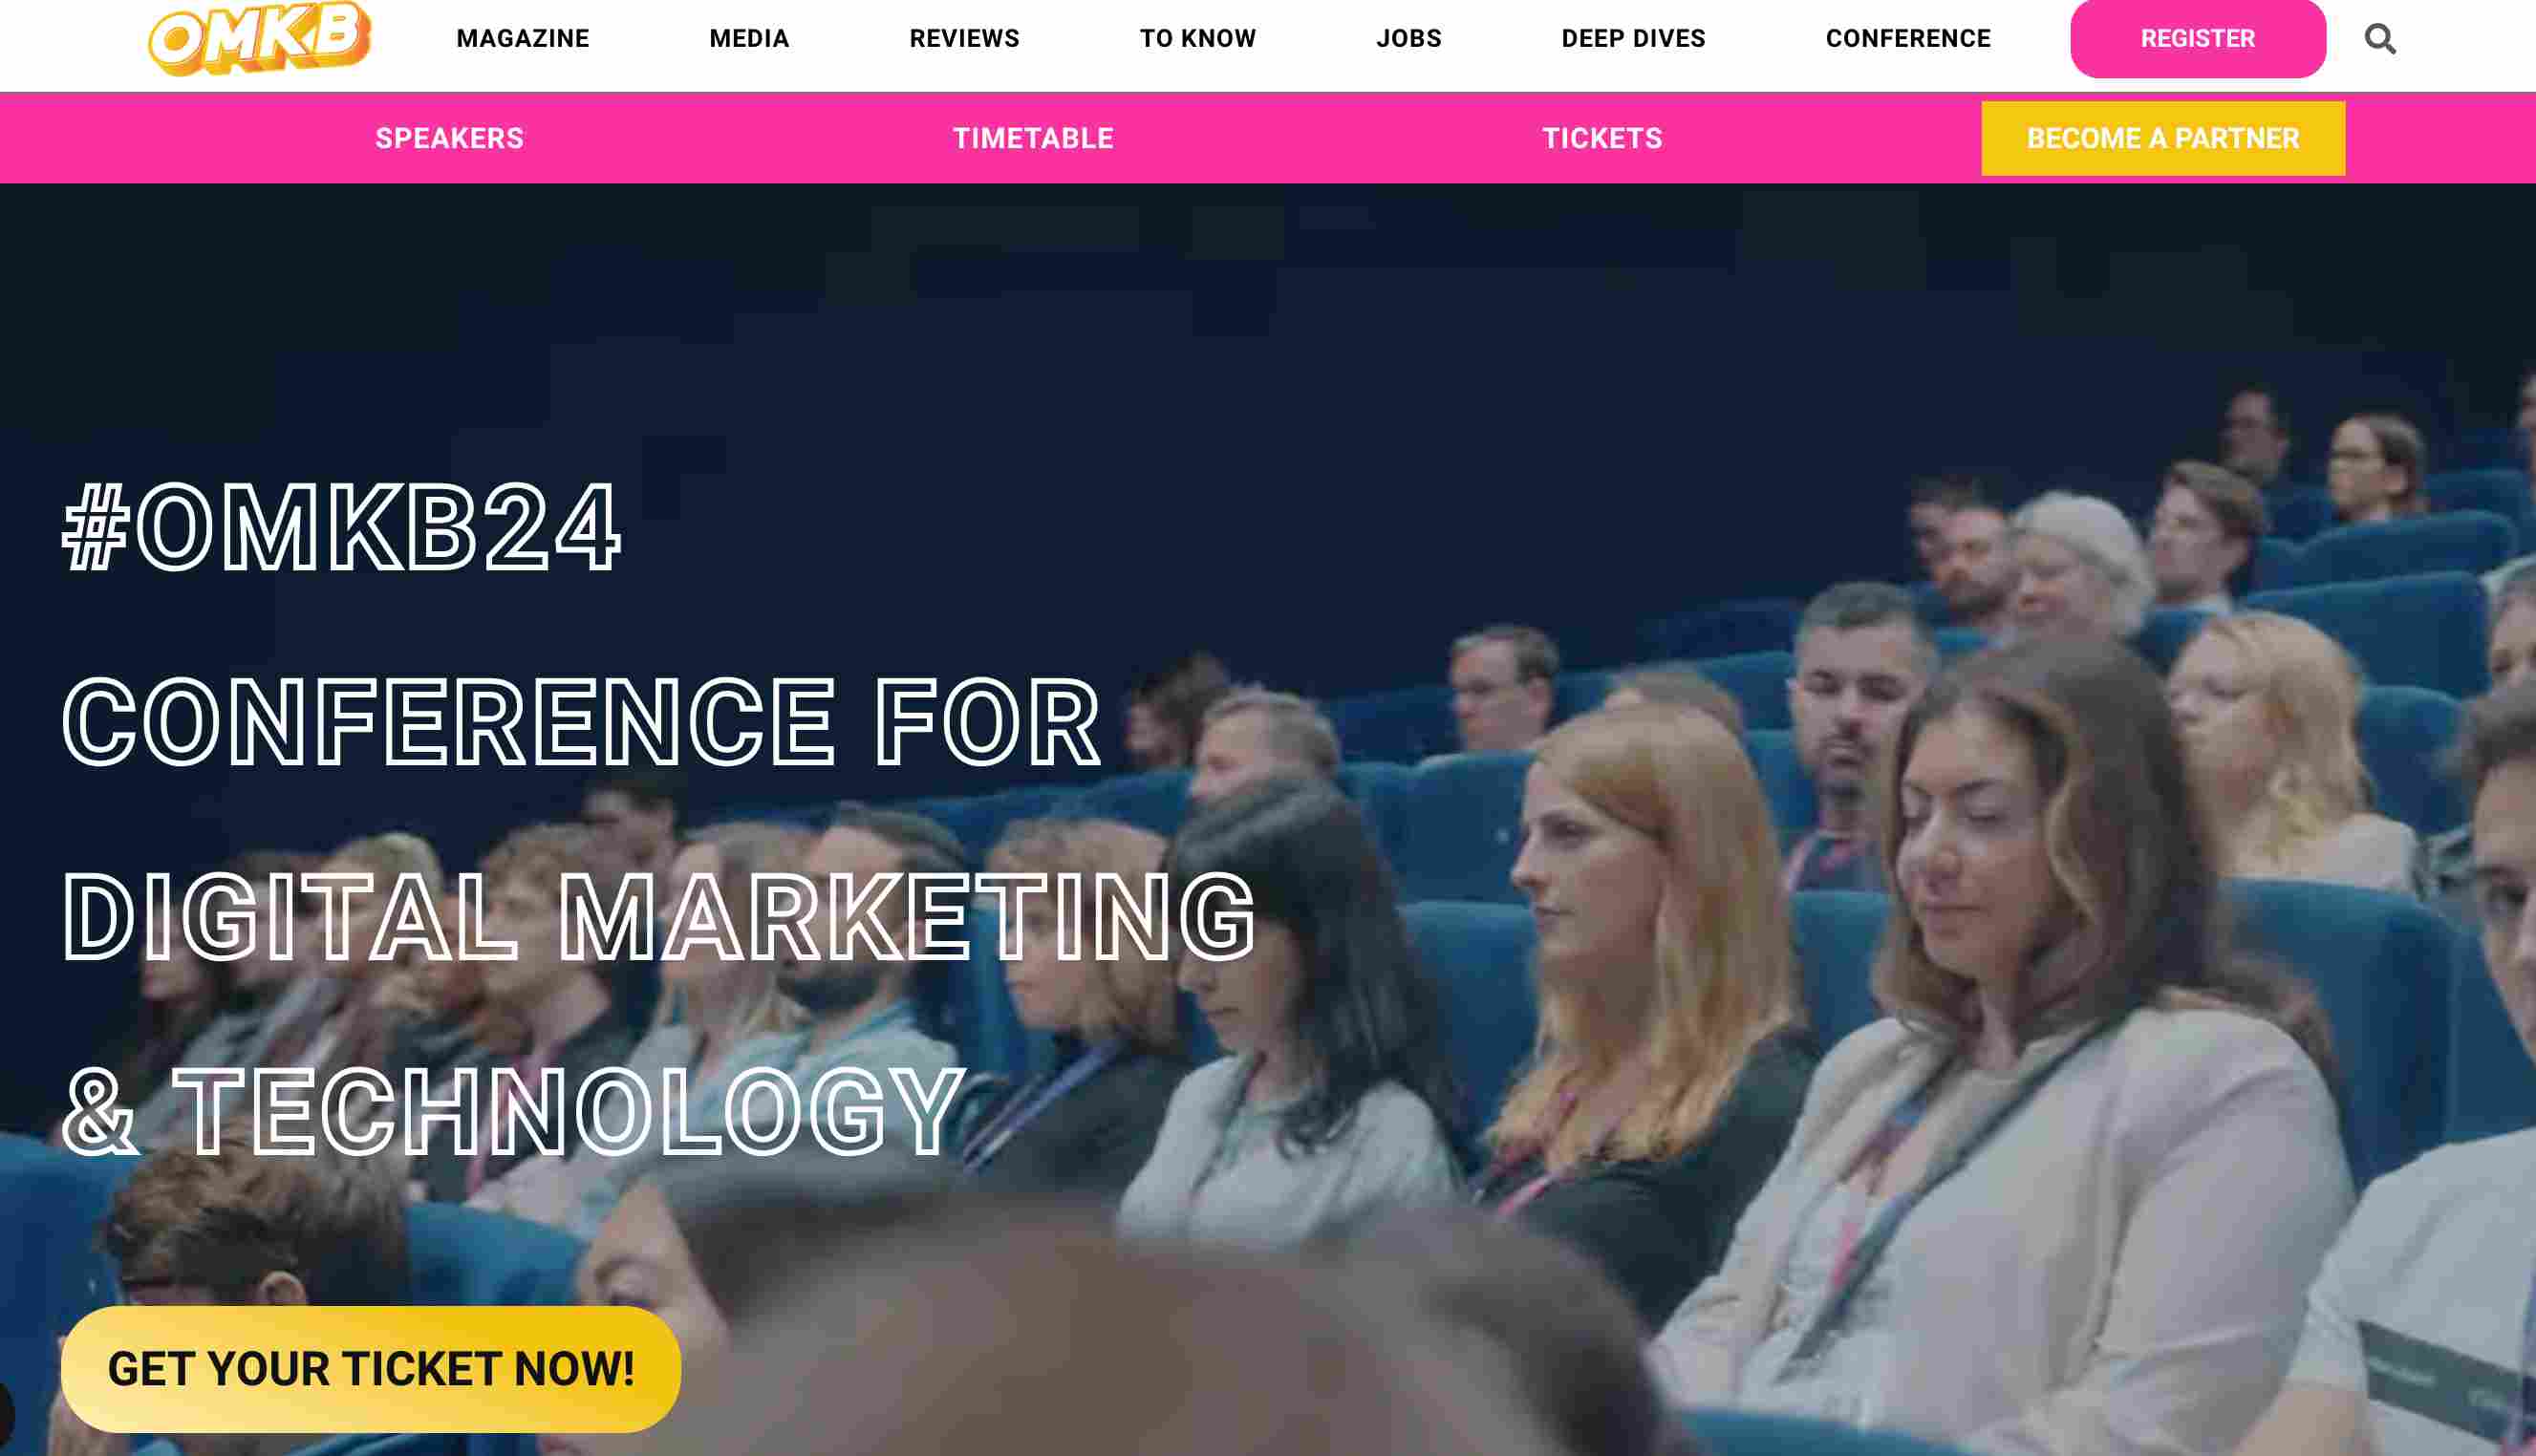 Digital marketing conference: OMKB24